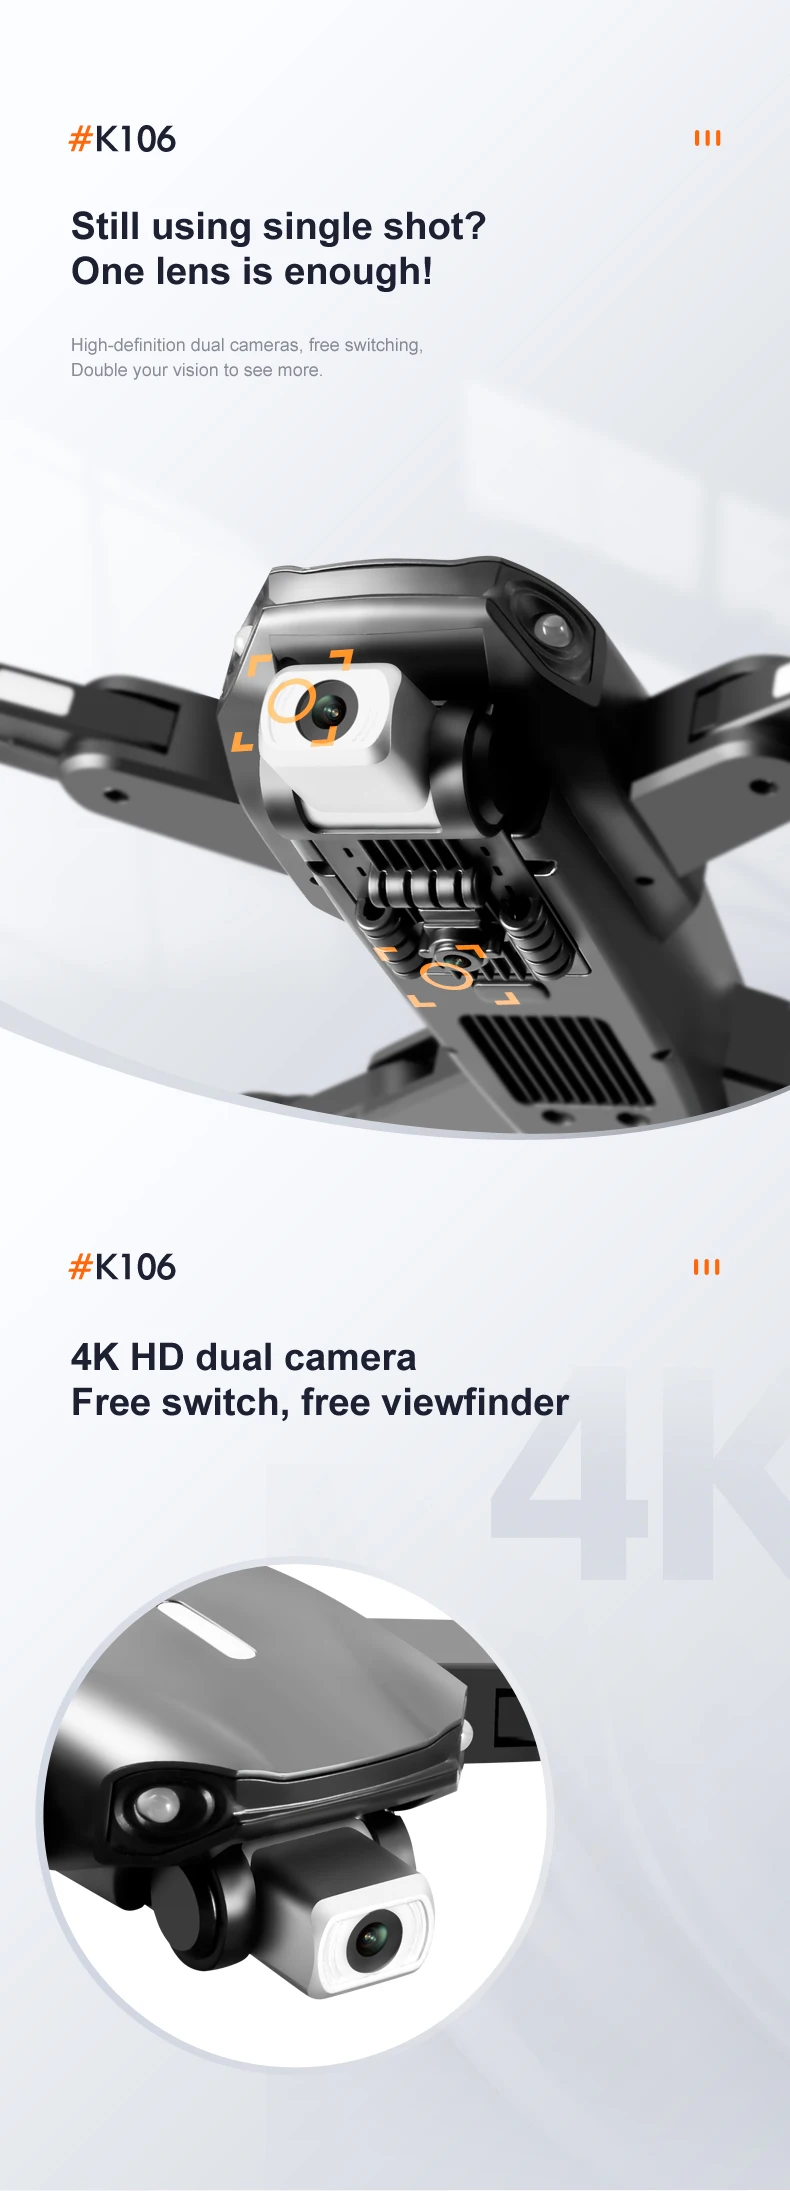 K106 Drone, #k1o6 still using single shot? one lens is enough